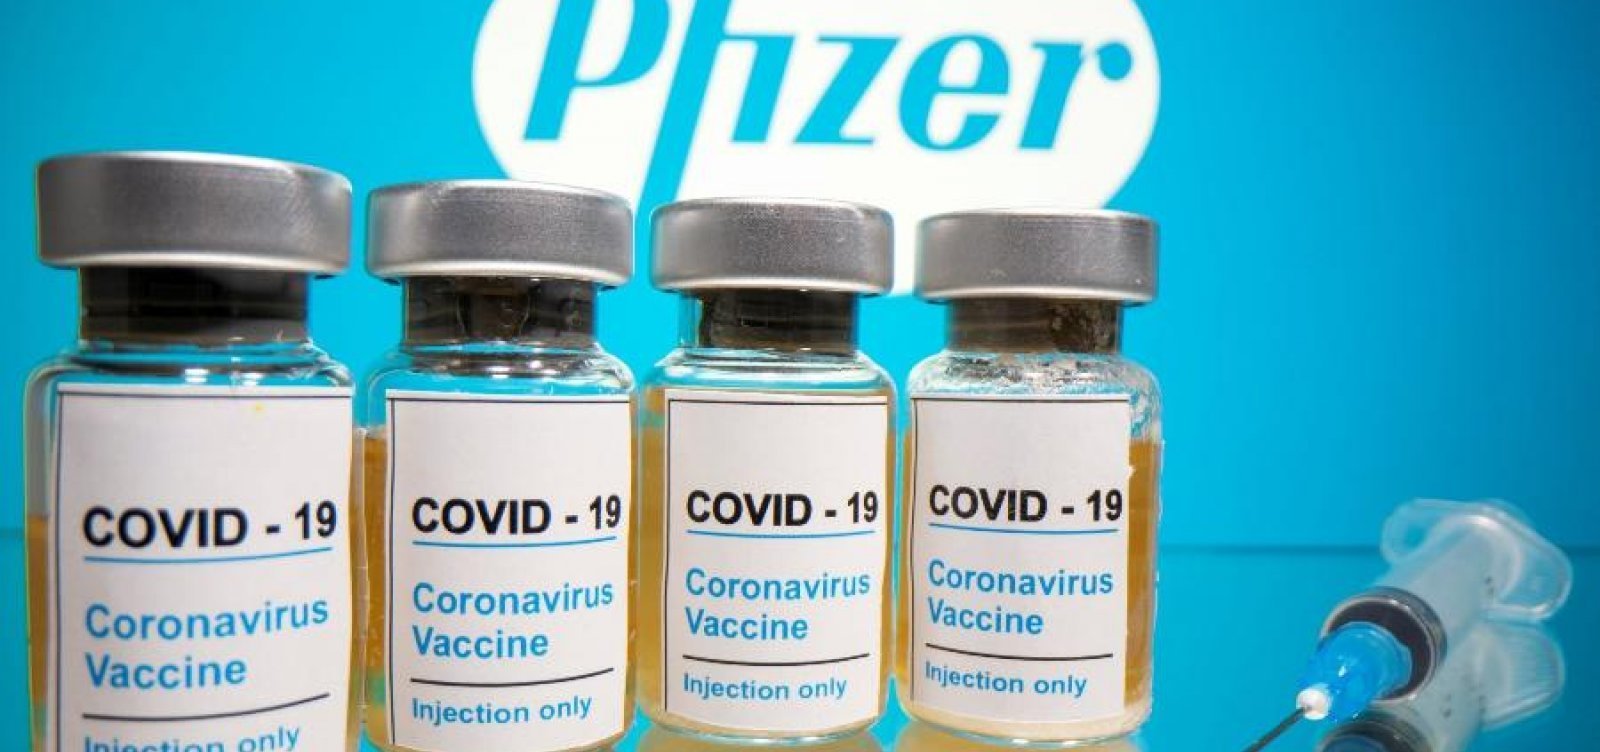 Por conta de novas cepas, Pfizer testará necessidade de 3ª dose